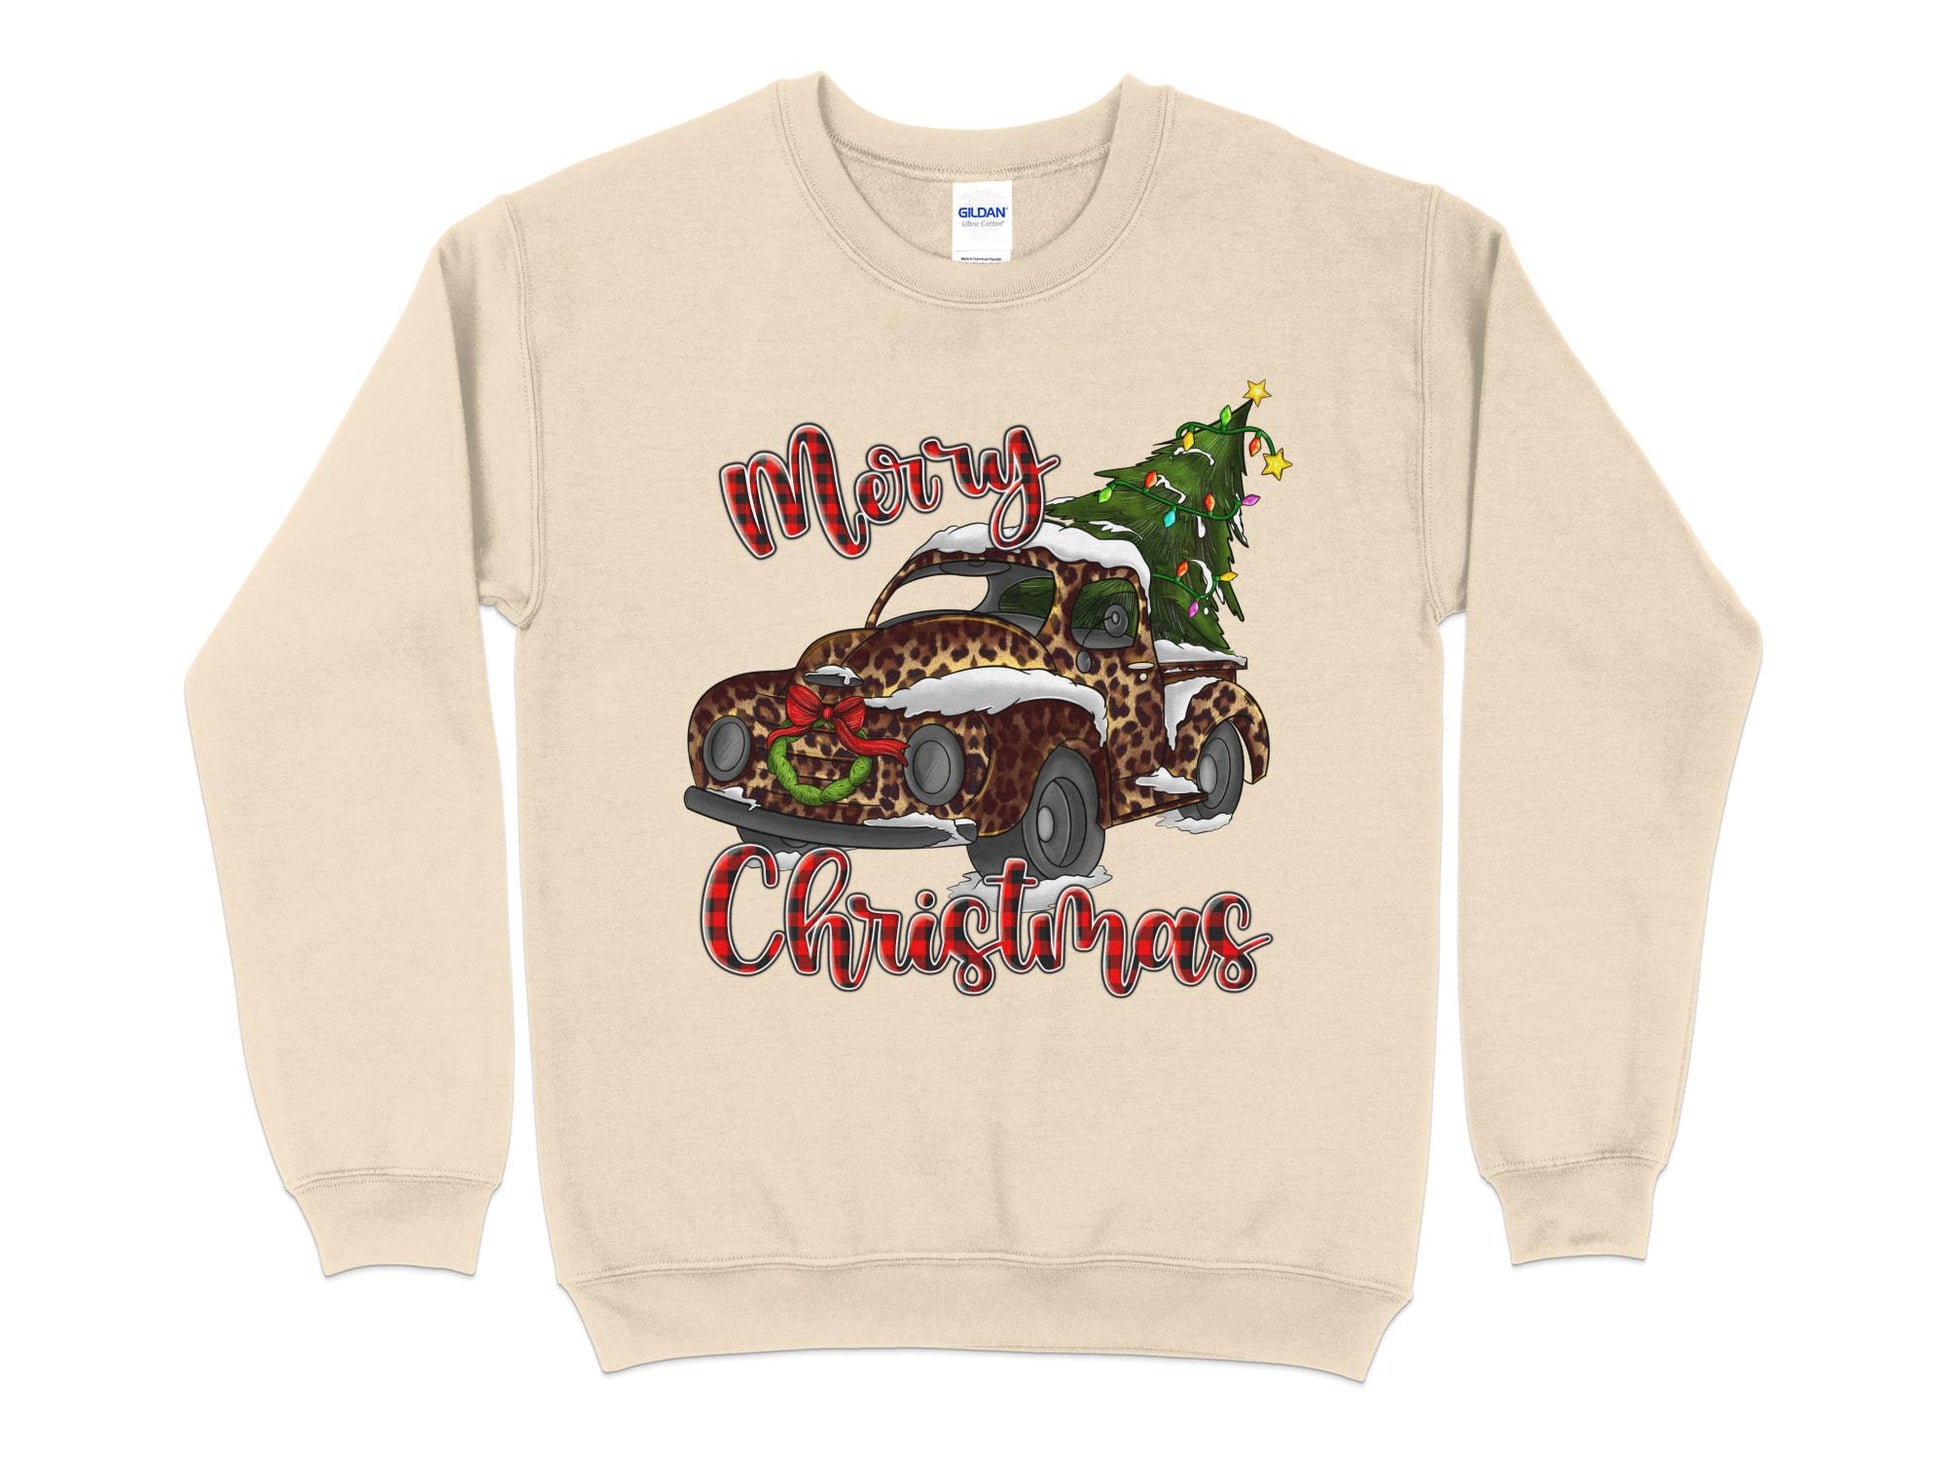 Merry Christmas Leopard Print Truck Sweatshirt, Christmas Sweater for Women, Christmas Gift for Women, Holiday Sweater, Xmas Shirt - Mardonyx Sweatshirt S / Sand